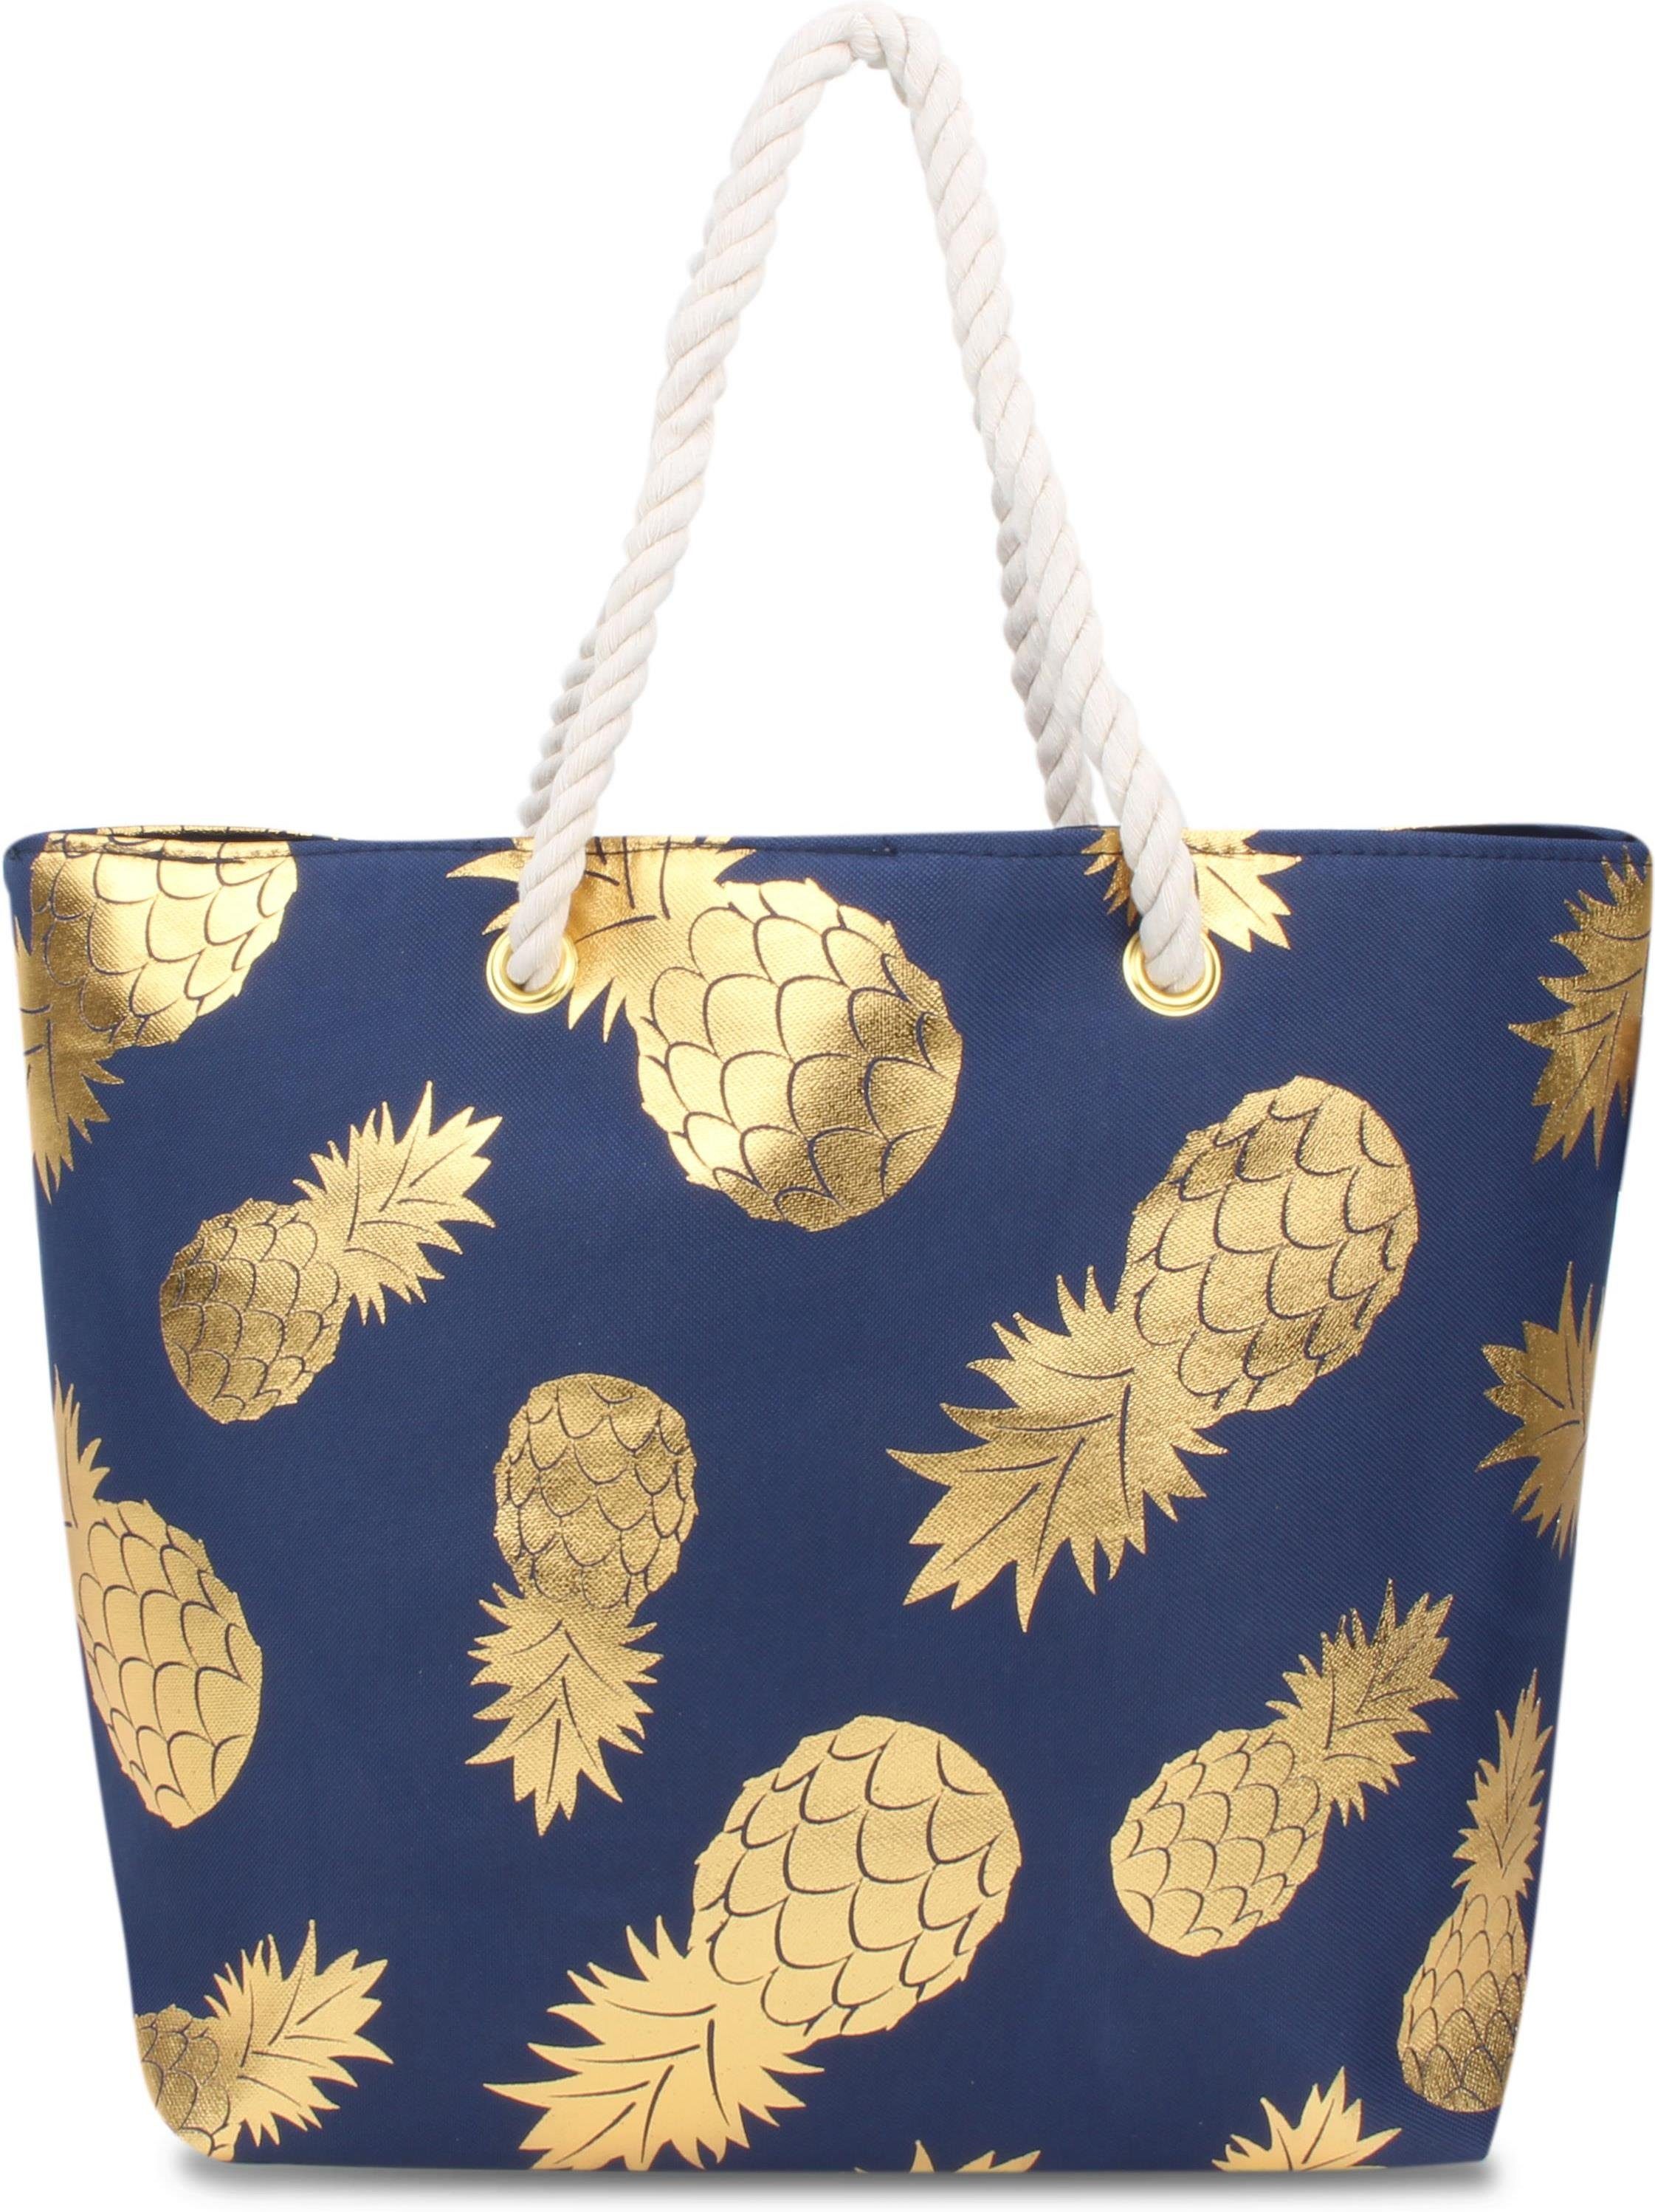 normani Strandtasche Bequeme Sommer-Umhängetasche, Strandtasche, Schultertasche als Henkeltasche tragbar Gold Pineapple